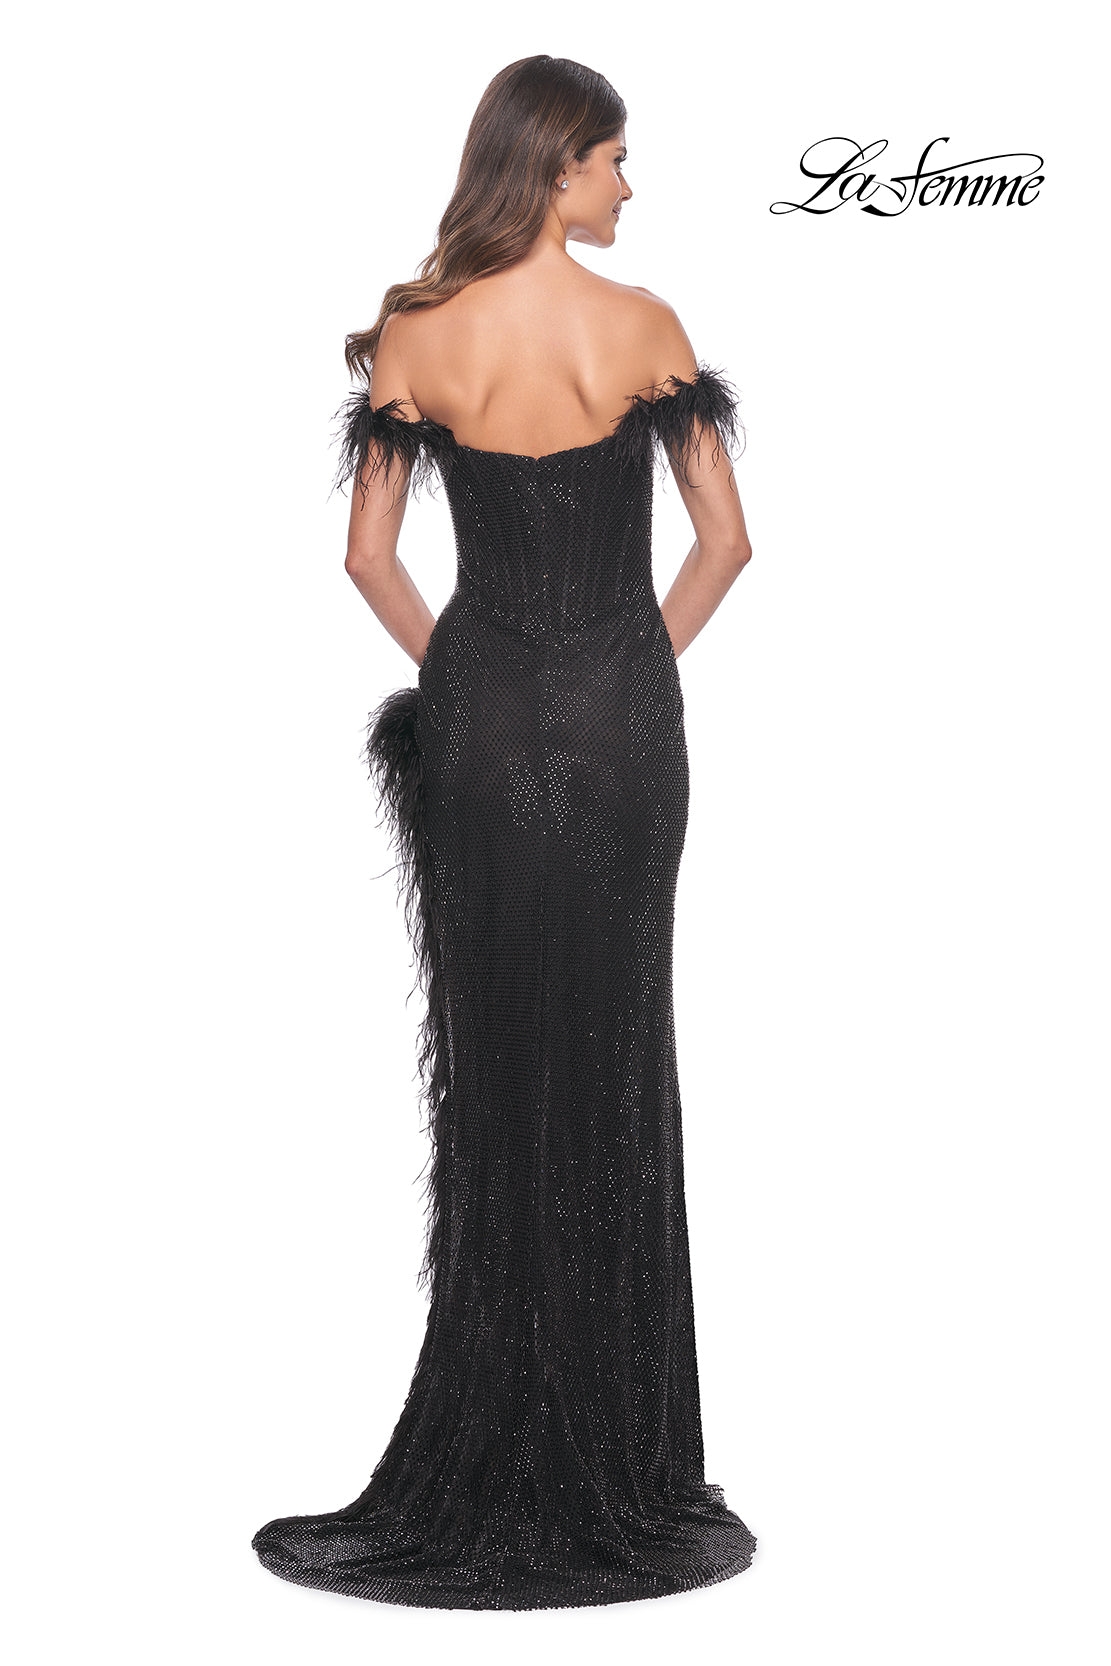 La-Femme-32151-Scoop-Neckline-Zipper-Back-High-Slit-Hot-Stone-Fishnet-Feathers-Column-Fitted-Black-Evening-Dress-B-Chic-Fashions-Prom-Dress